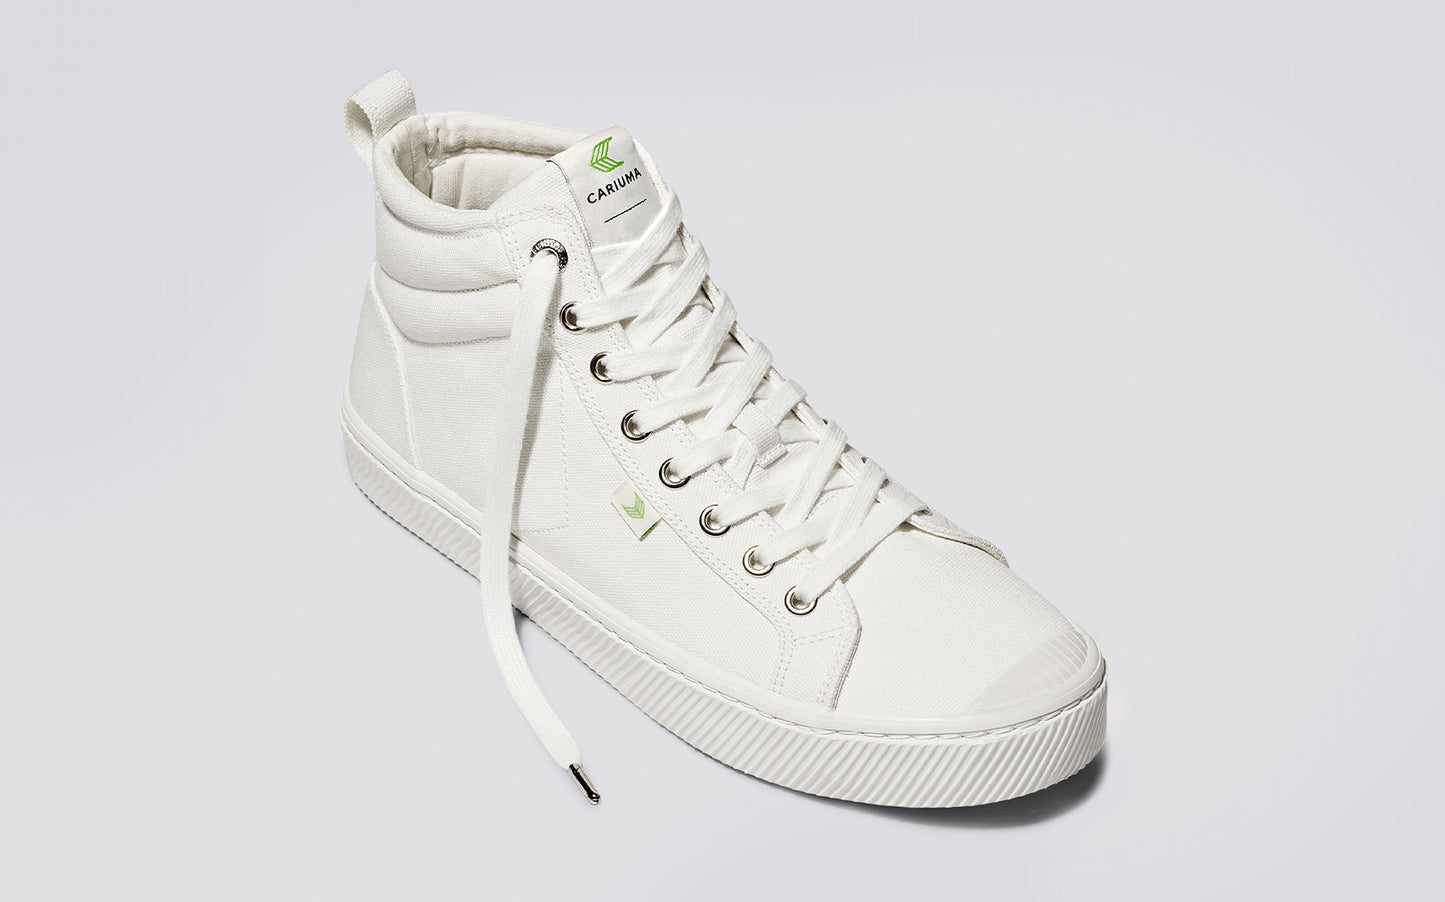 Cariuma OCA High Off-White Canvas Sneaker Unisex